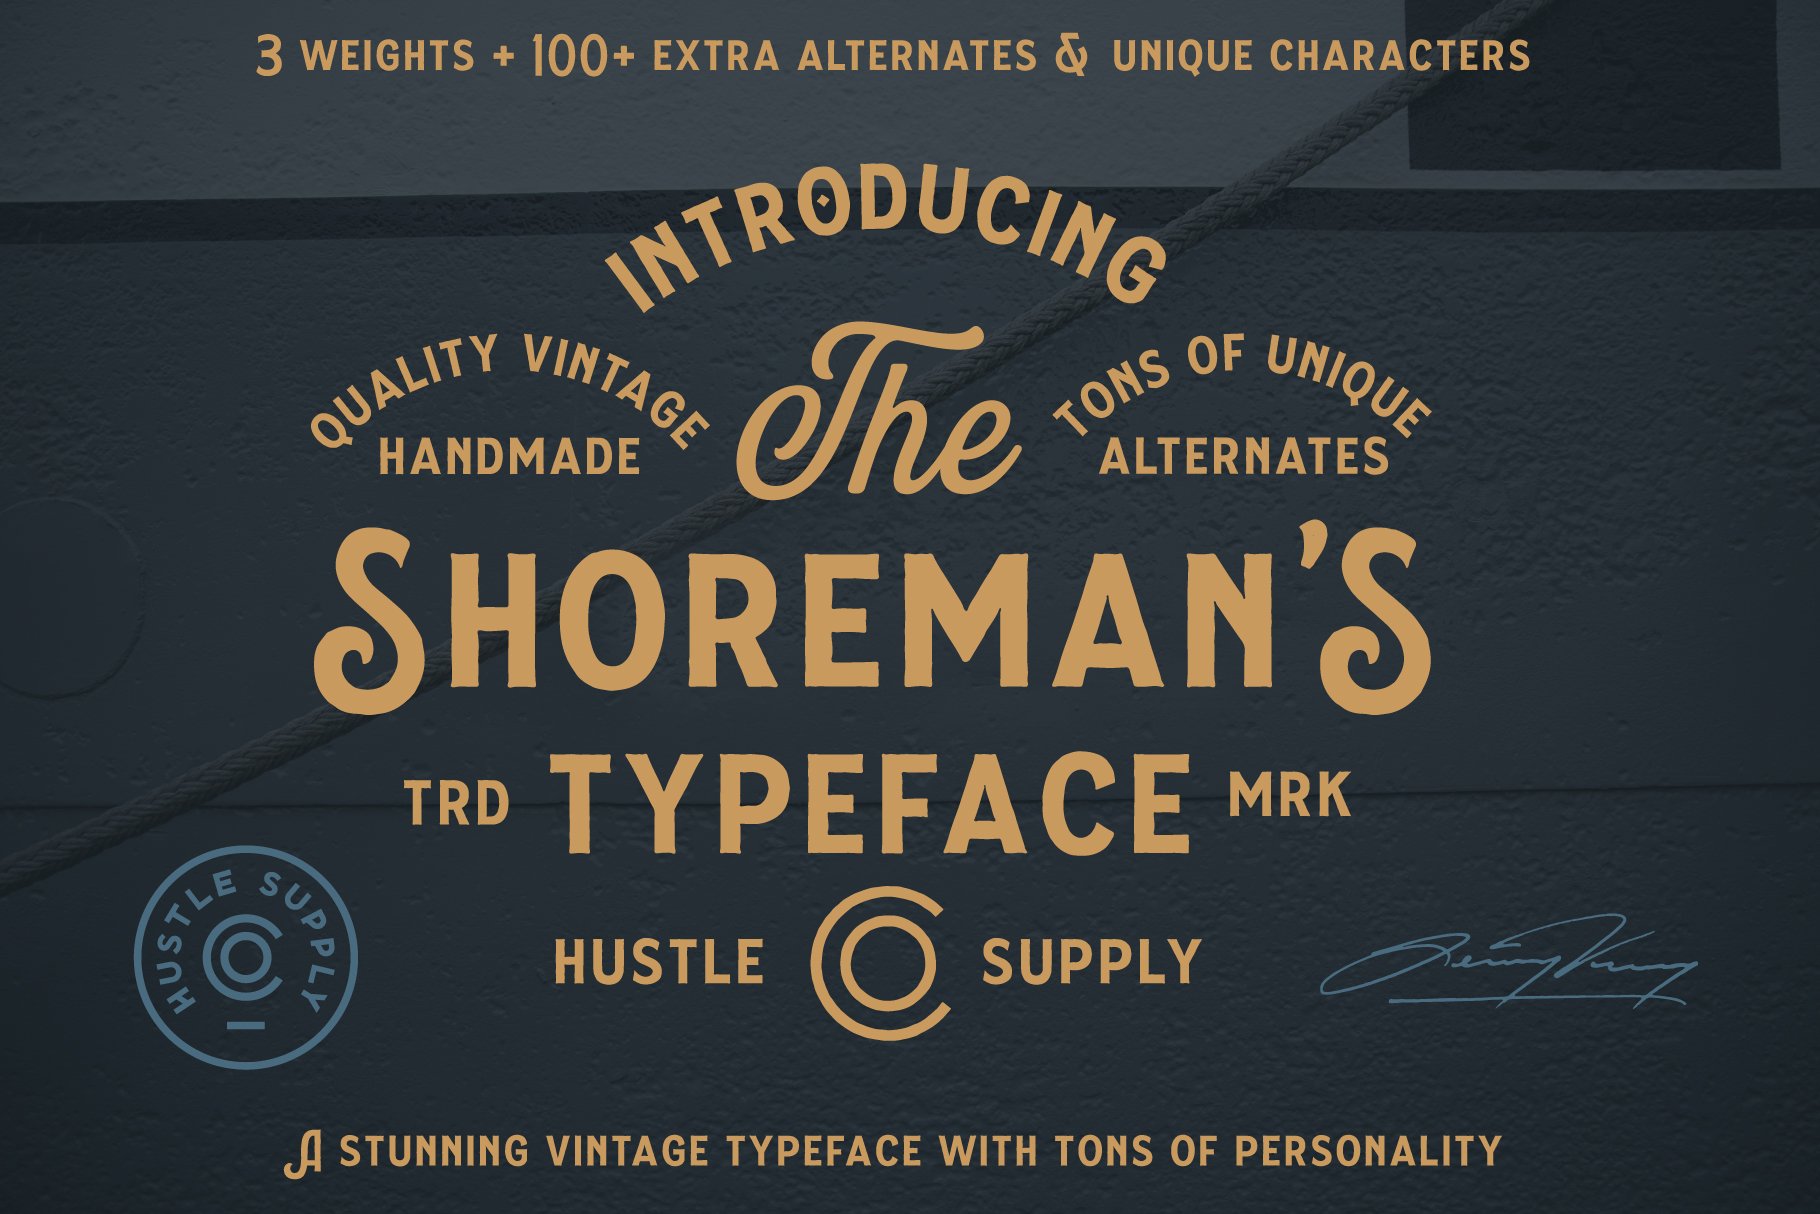 The Shoreman's Typeface cover image.